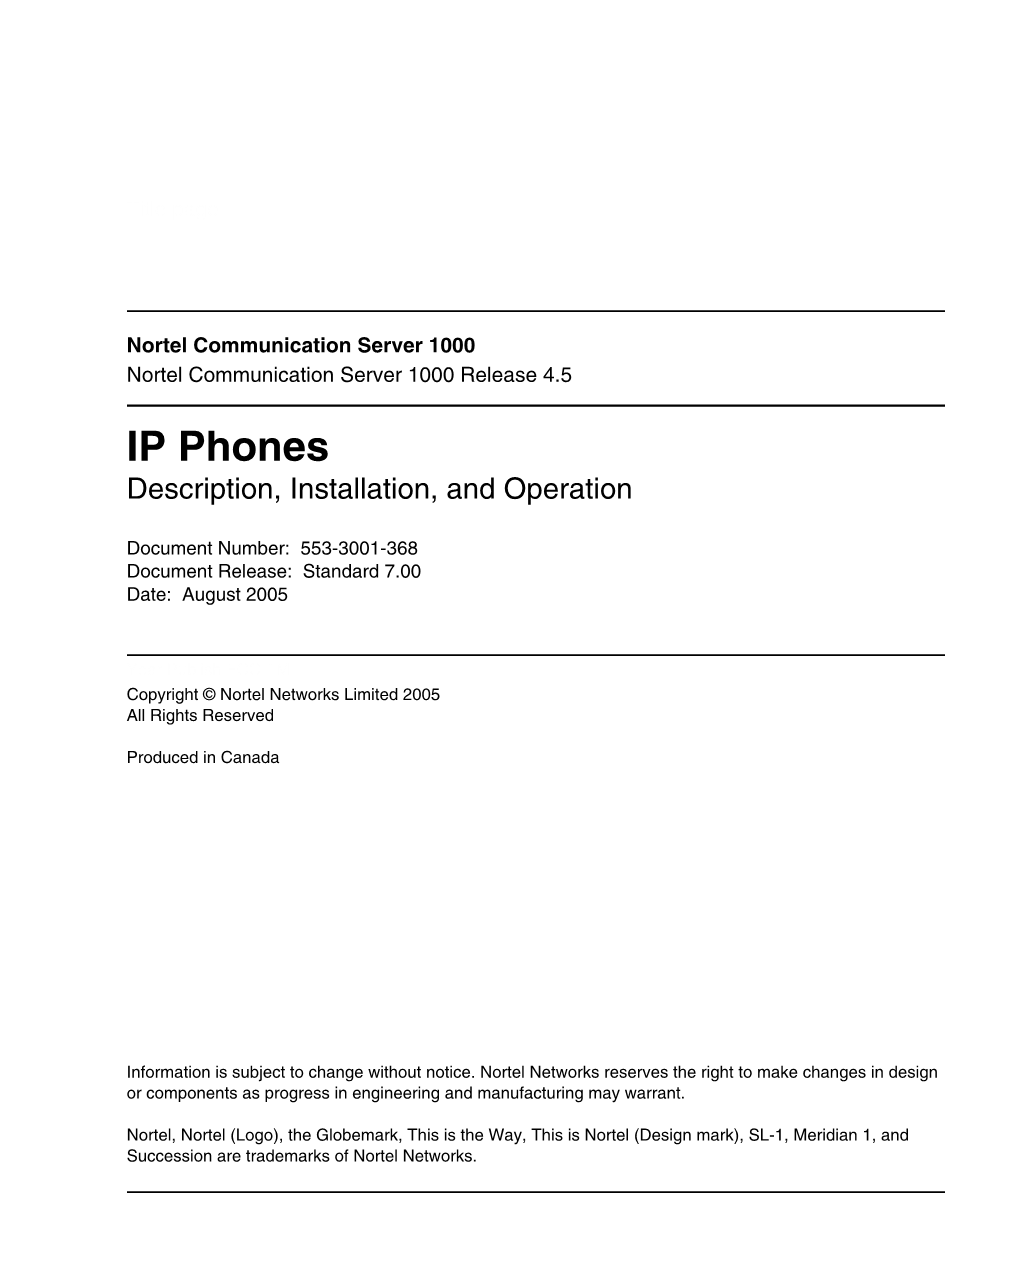 IP Phones Description, Installation, and Operation